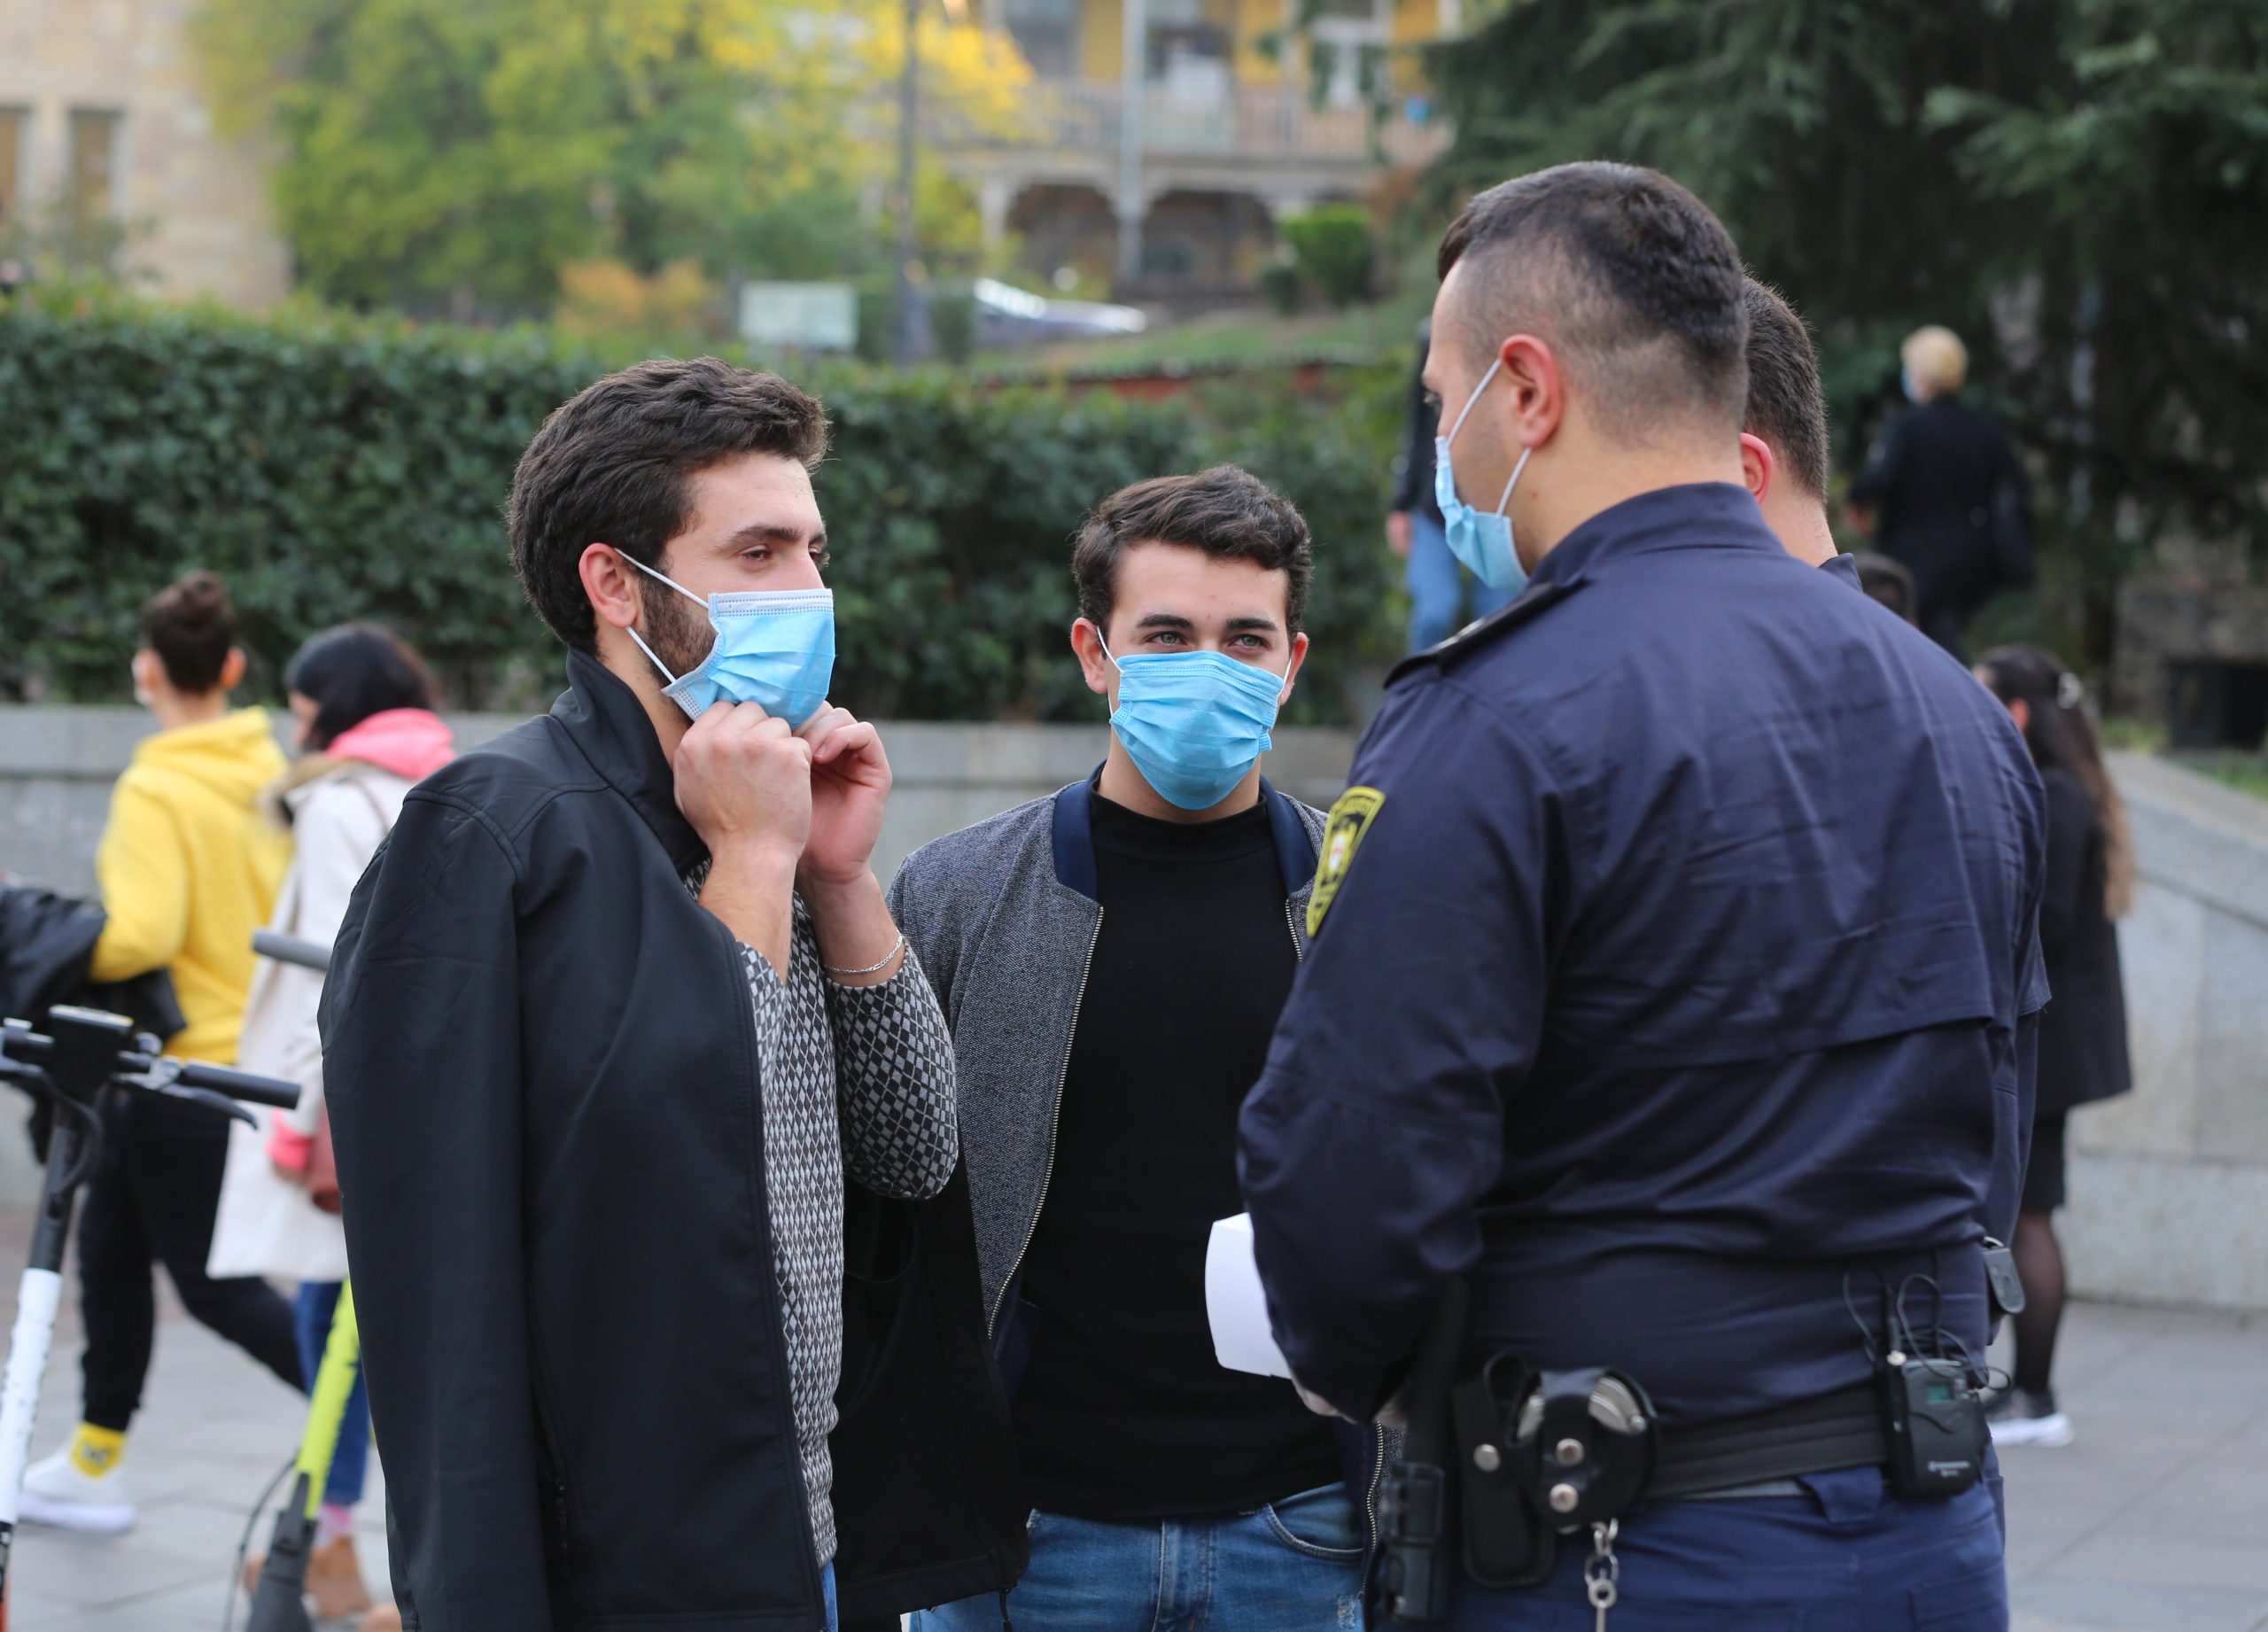 Police Mask scaled новости Covid-19, Георгия Гибрадзе, коронавирус, коронавирус в Грузии, медицинские маски